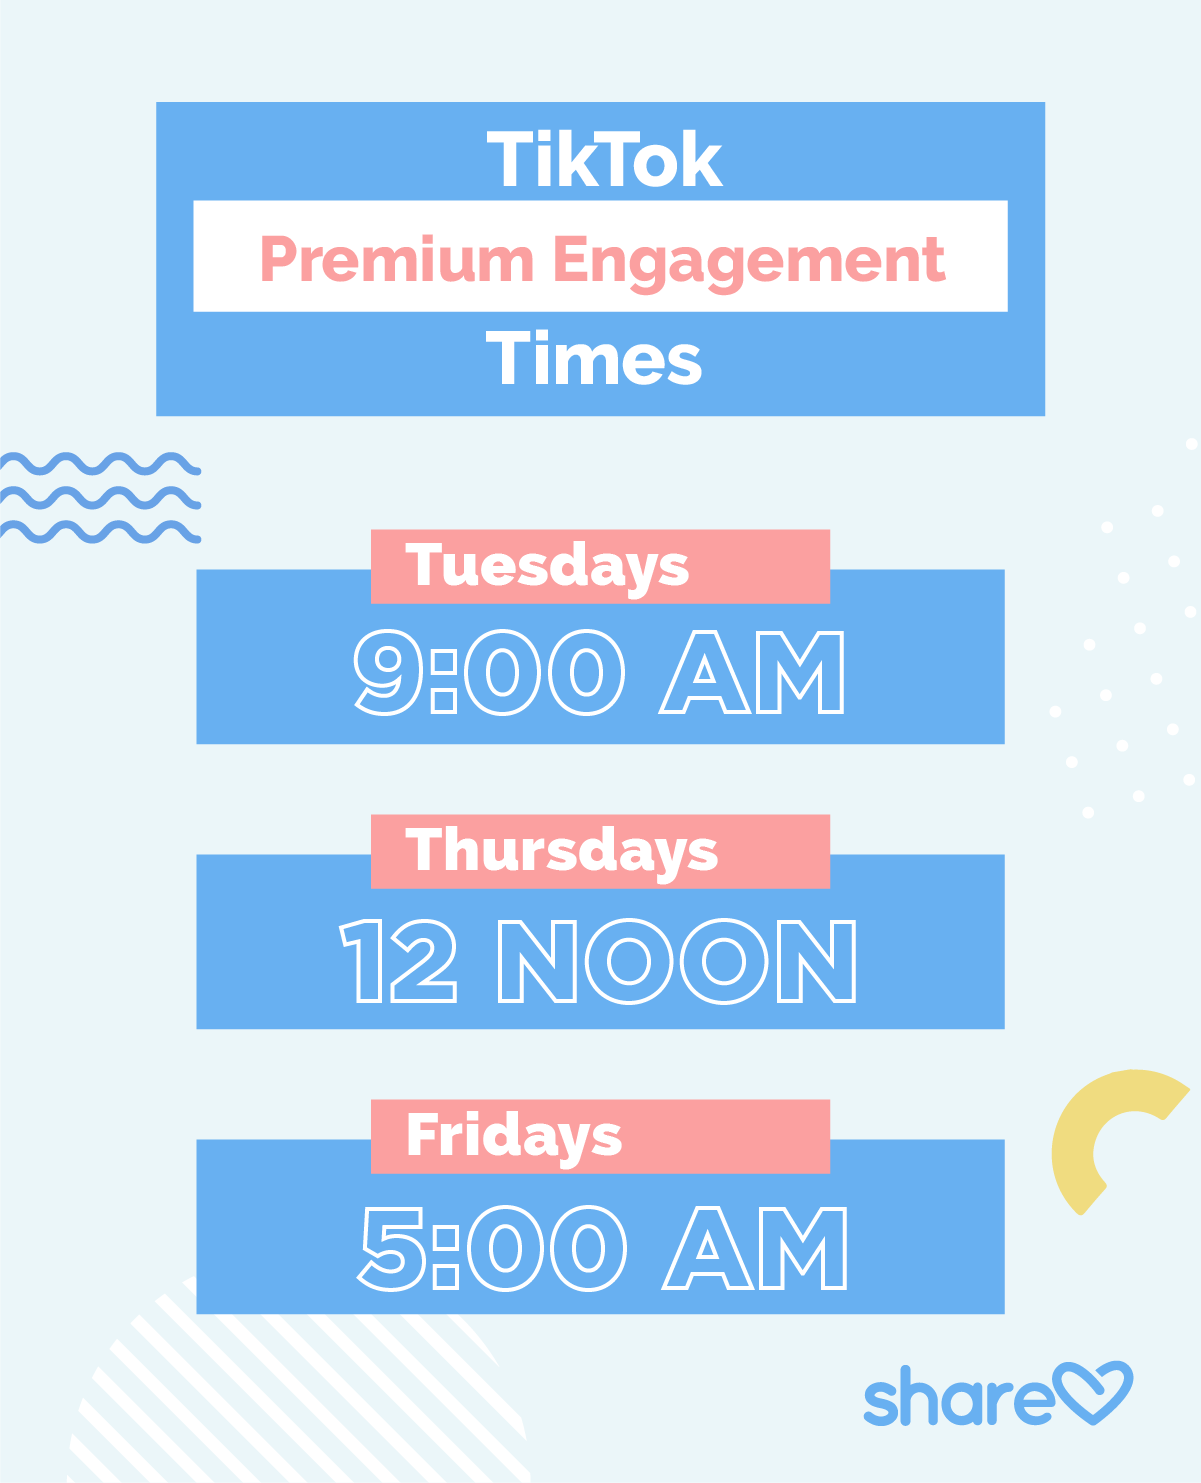 Artwork 2 - Tiktok Premium Engagement Times